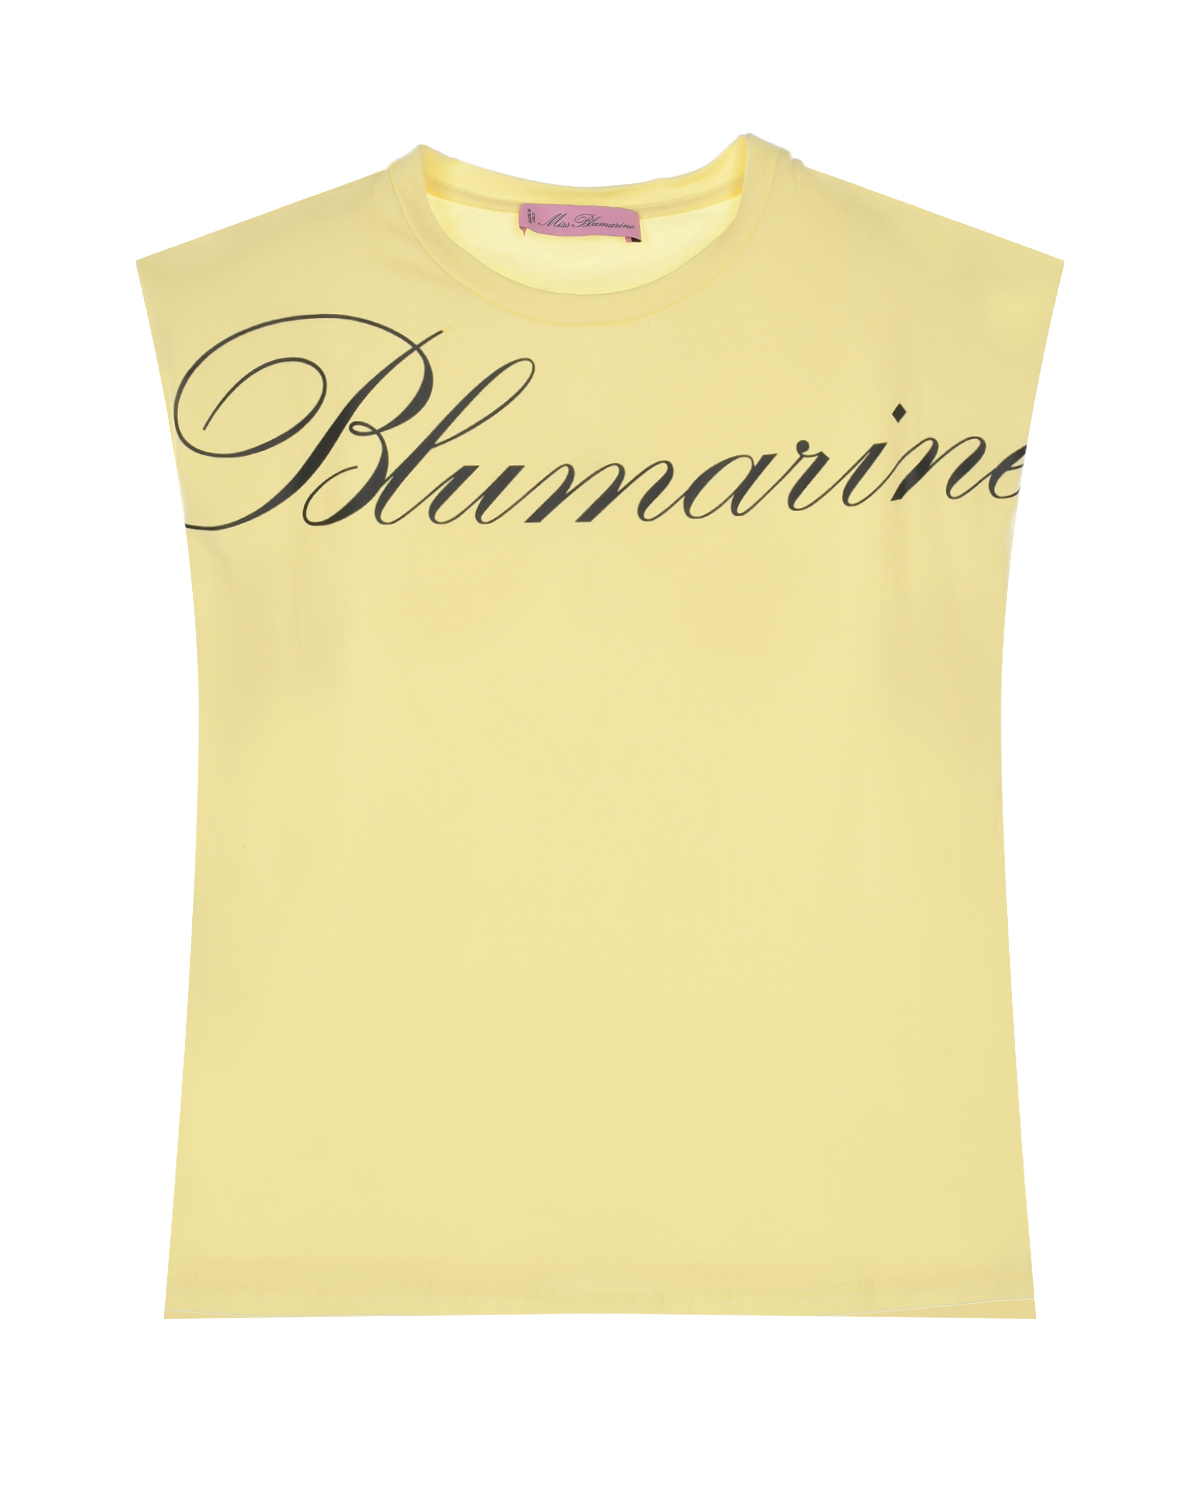 Желтая футболка без рукавов Miss Blumarine, размер 152, цвет желтый - фото 1